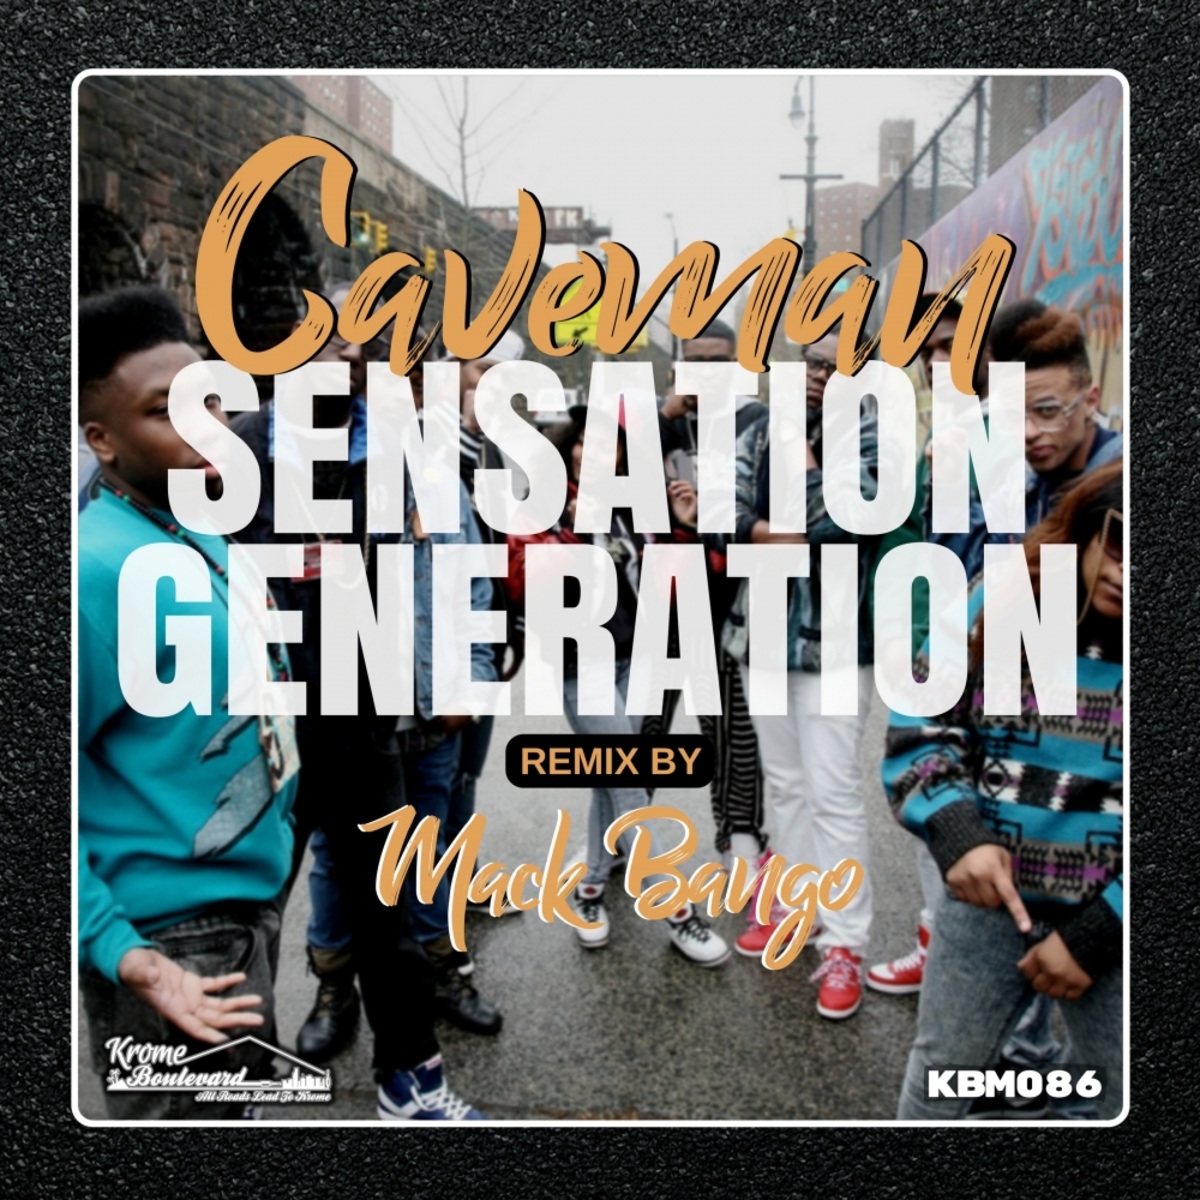 Caveman - Sensation Generation / Krome Boulevard Music